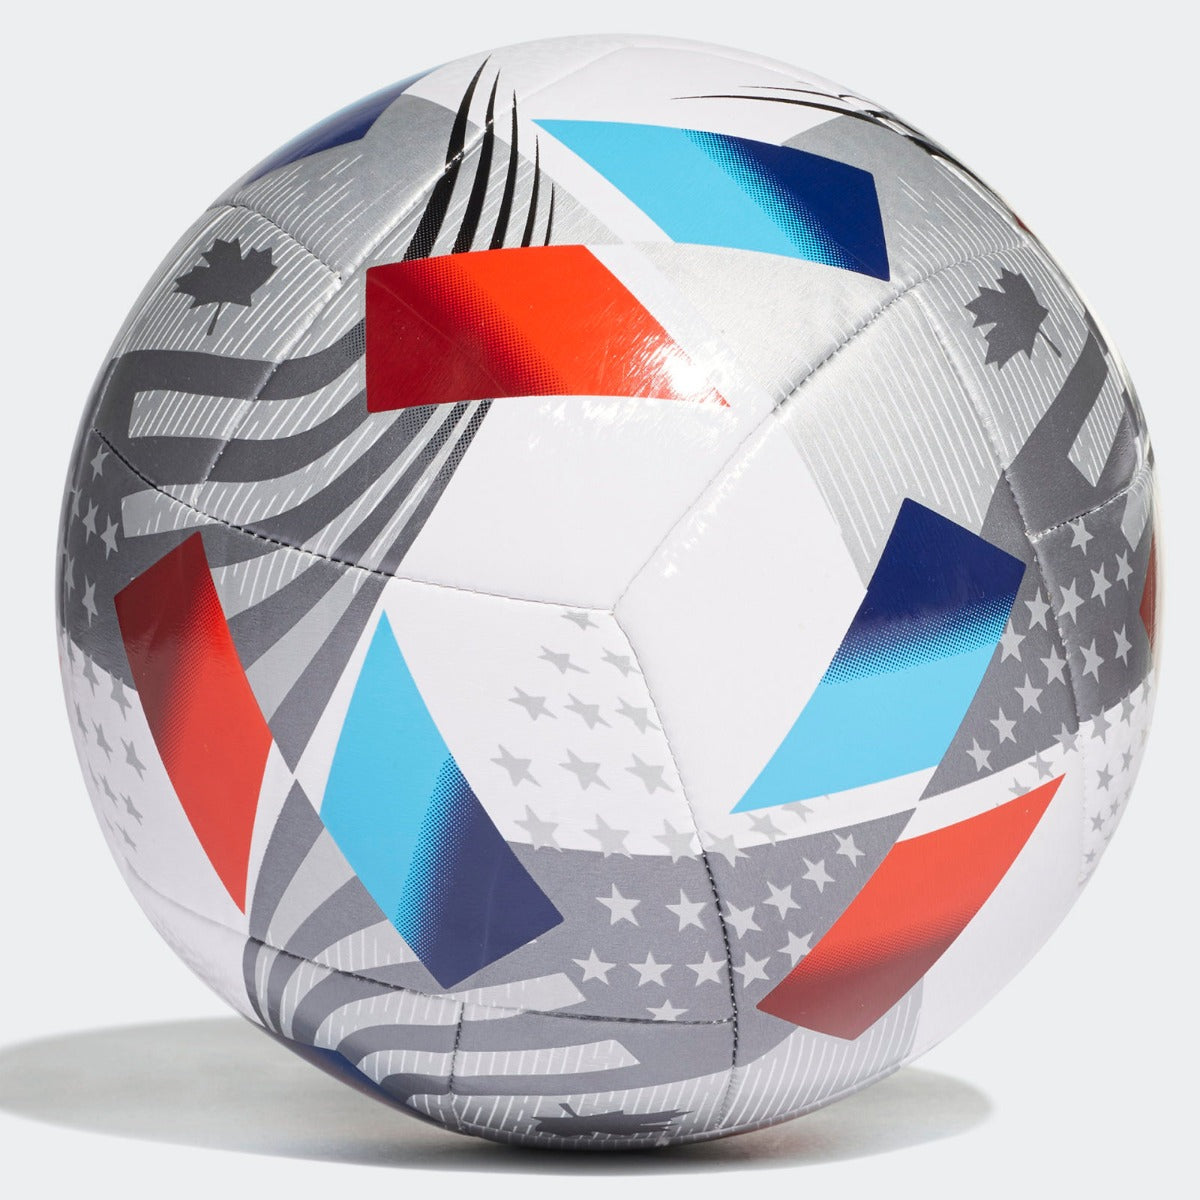 Adidas 2021 MLS Training Ball - White-Grey-Blue-Red